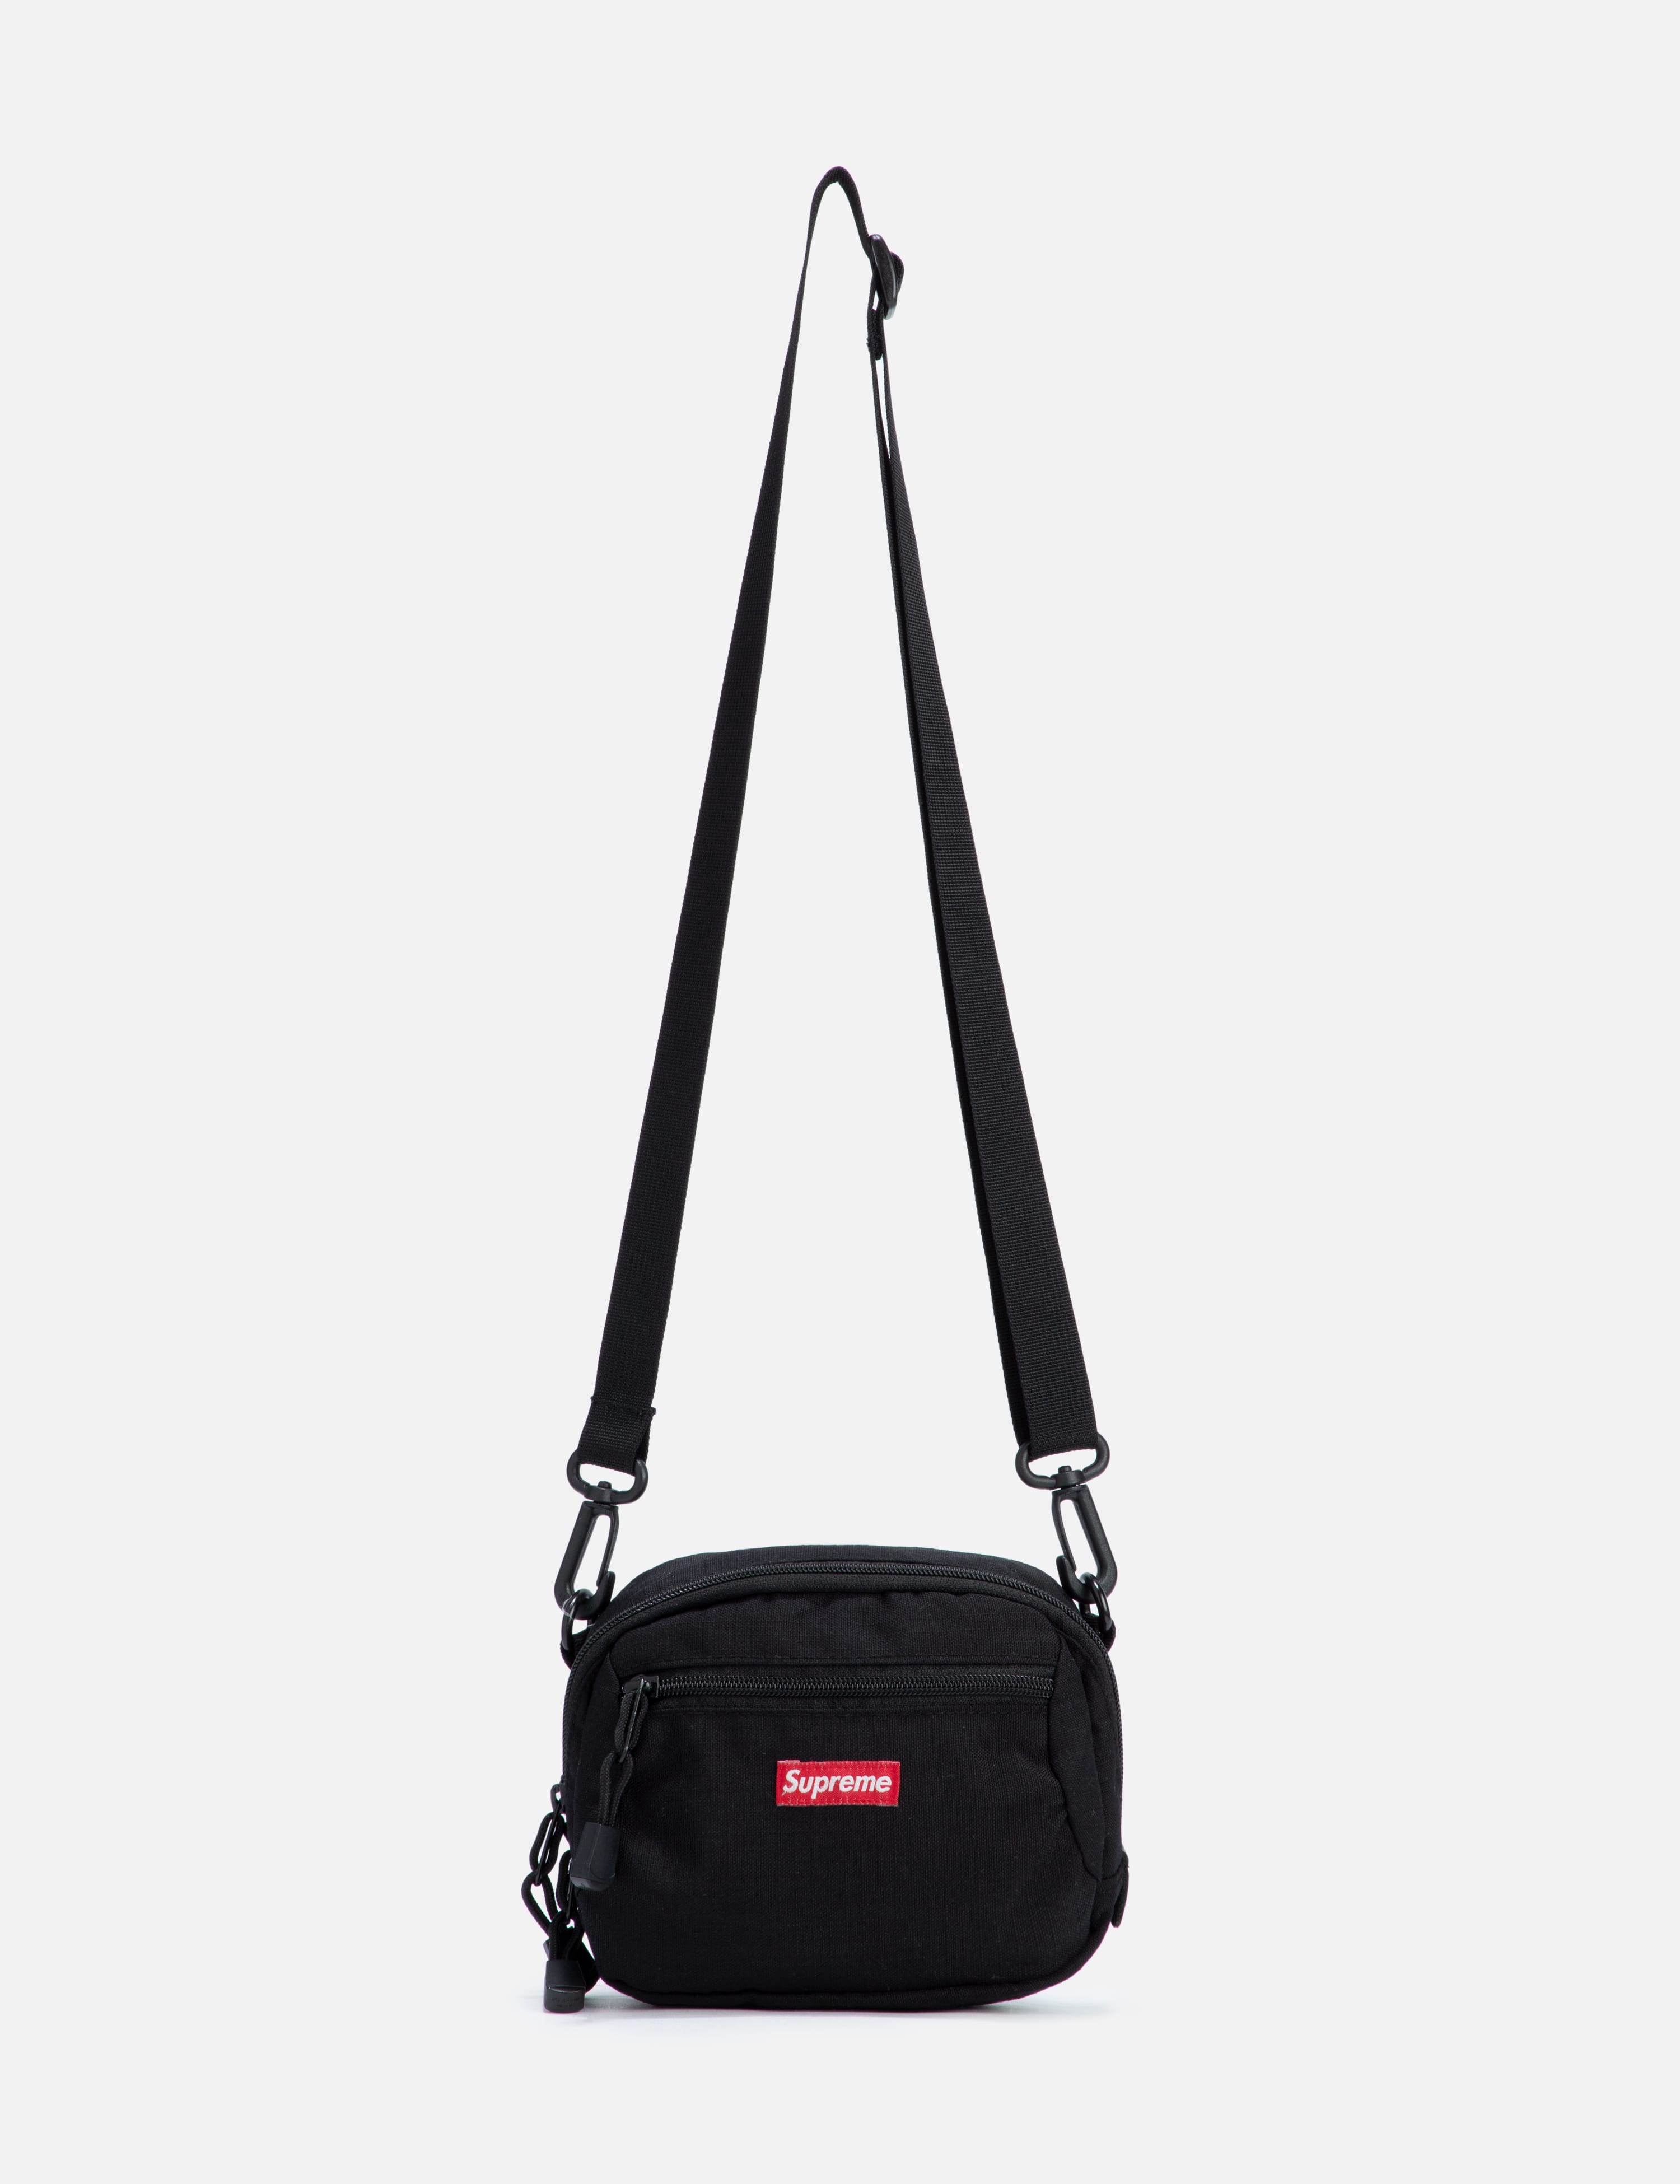 Supreme - Supreme Small Waist Bag | HBX - Globally Curated Fashion